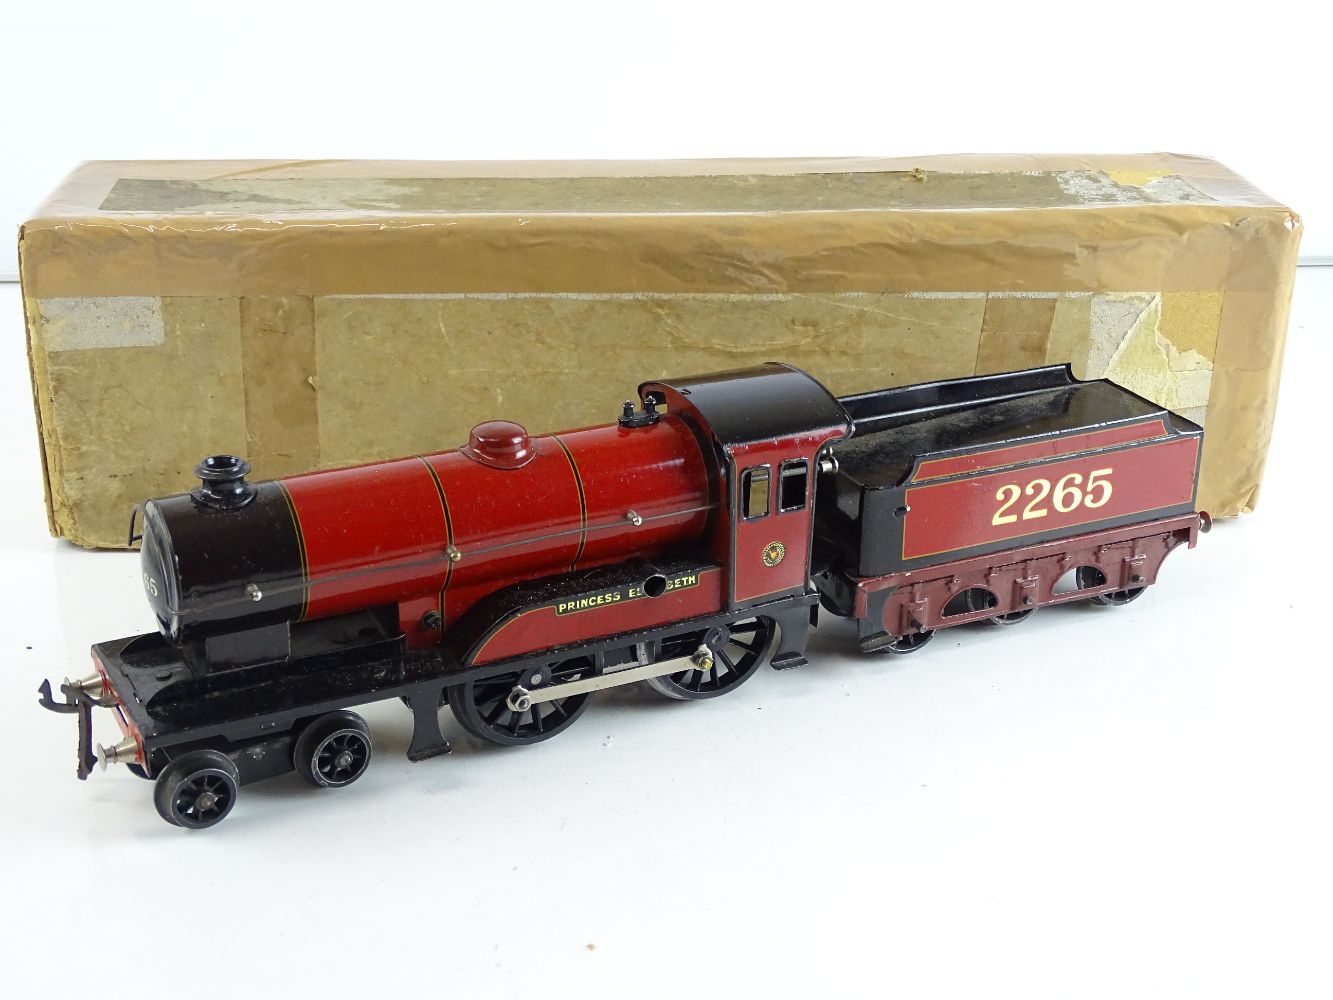 Toys & Model Railways Collectors Sale LIVE ONLINE WEBCAST ONLY